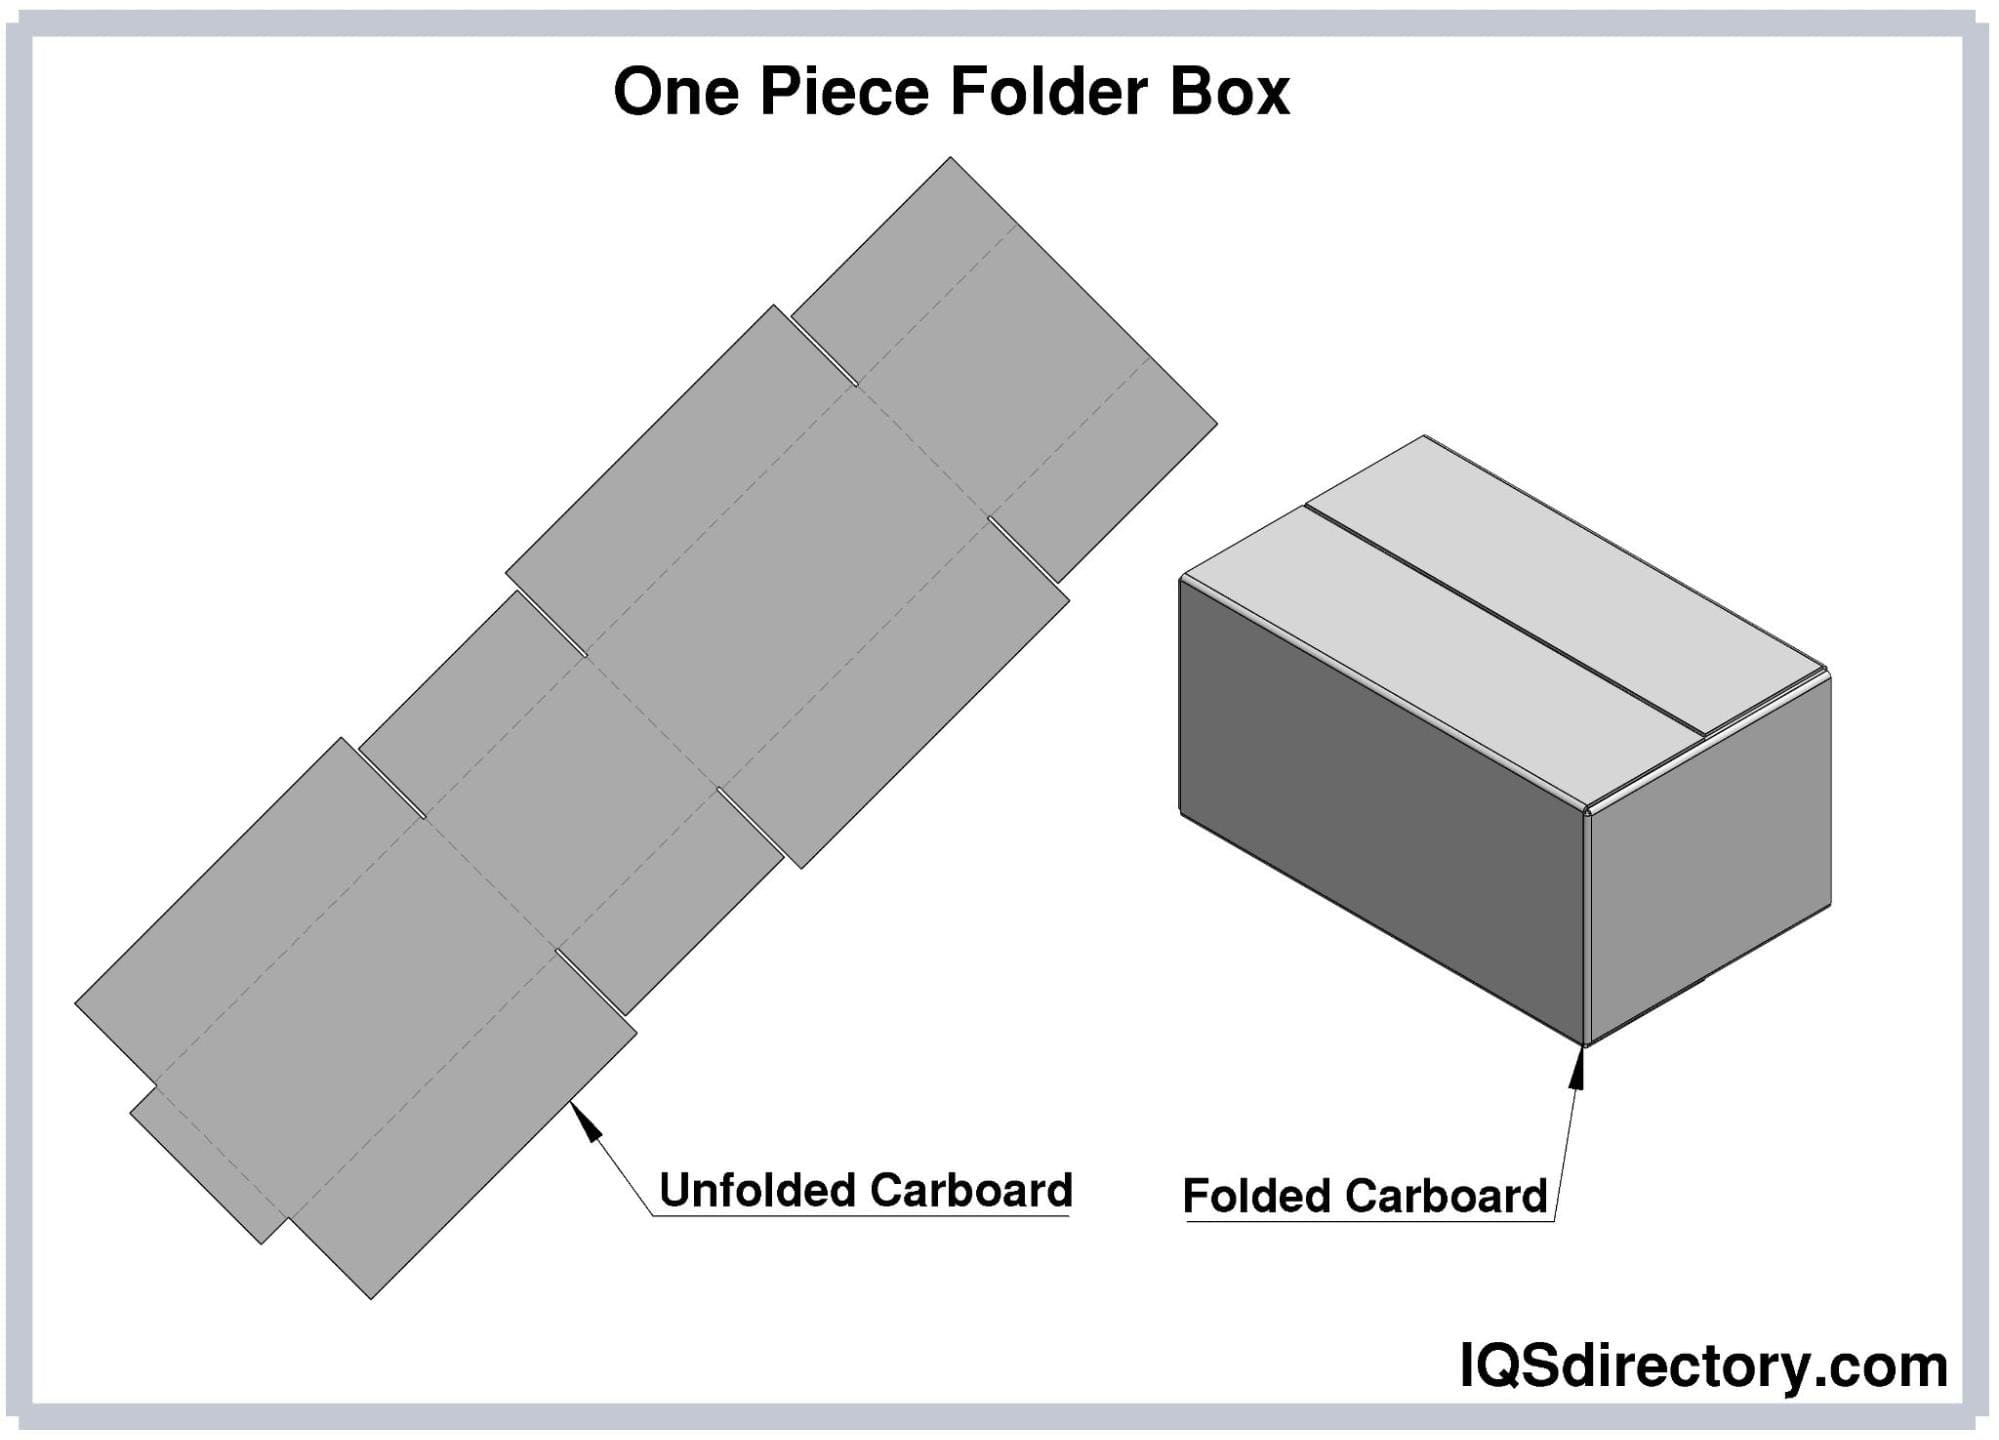 One Piece Folder Cardboard Box